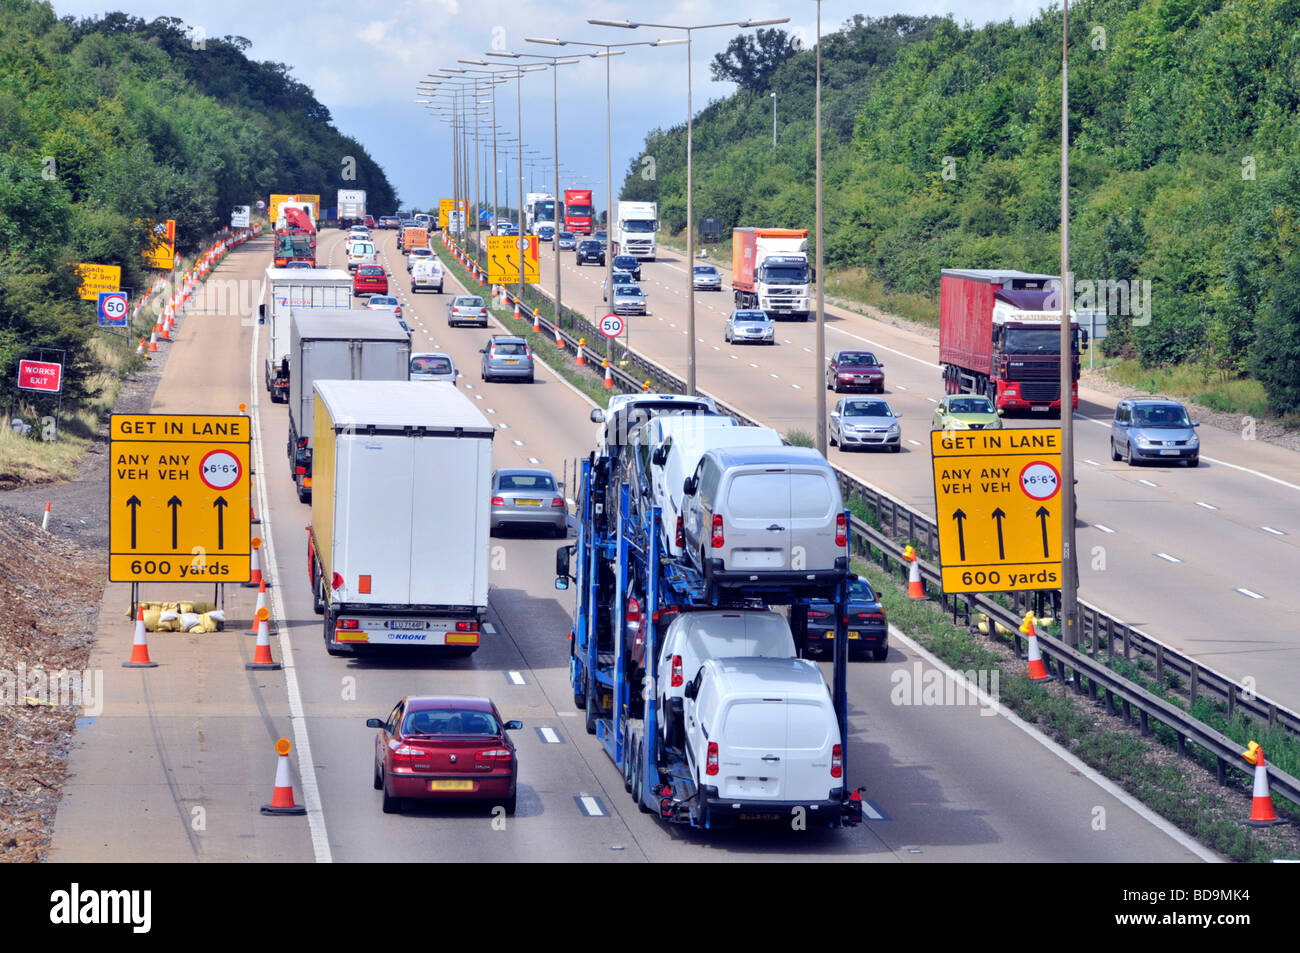 M25 motorway widening lane switching signs on approach to roadworks Stock Photo